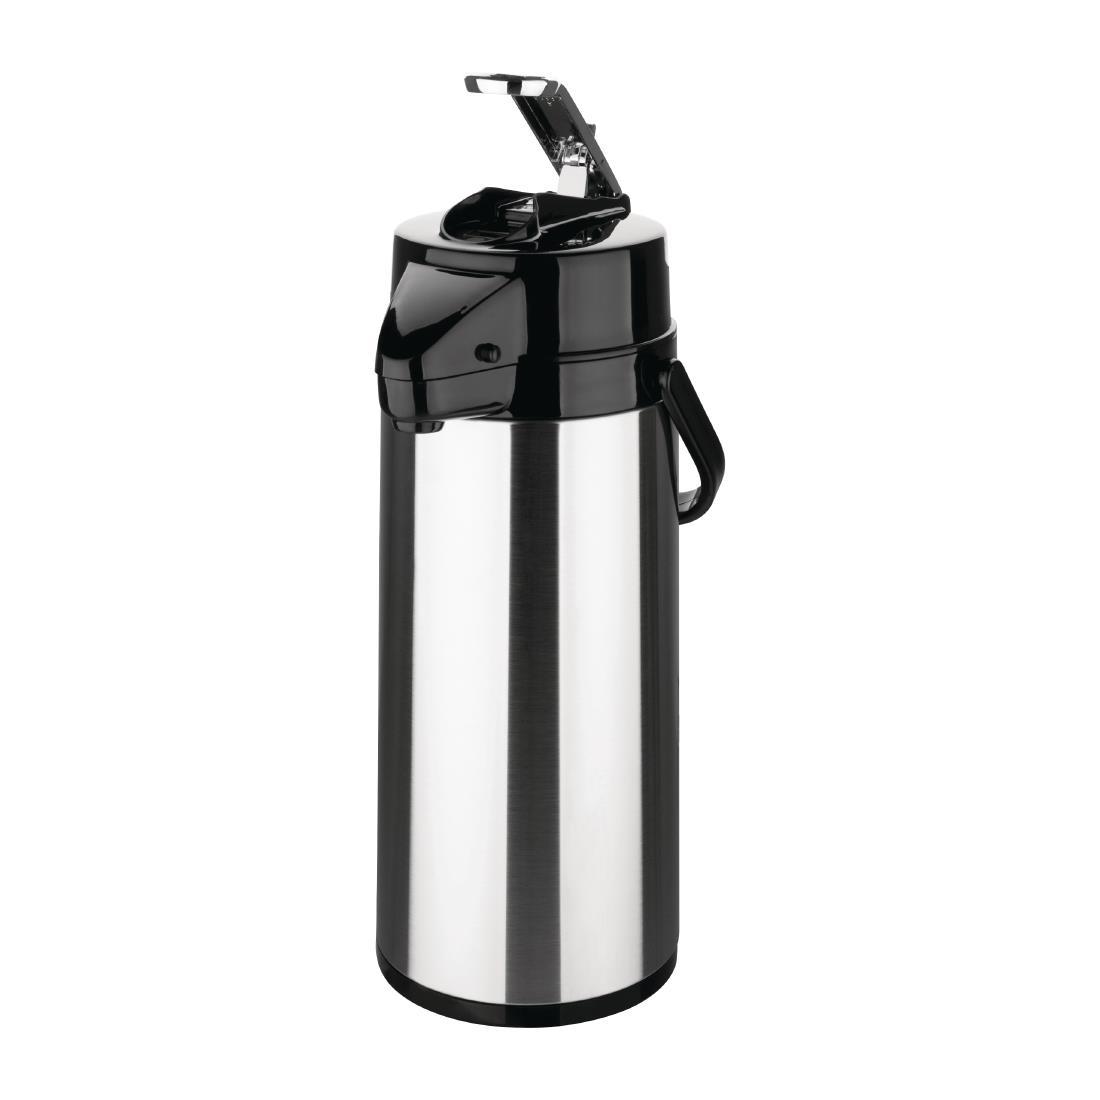 Buffalo Airpot Filter Coffee Maker - CW306  - 9